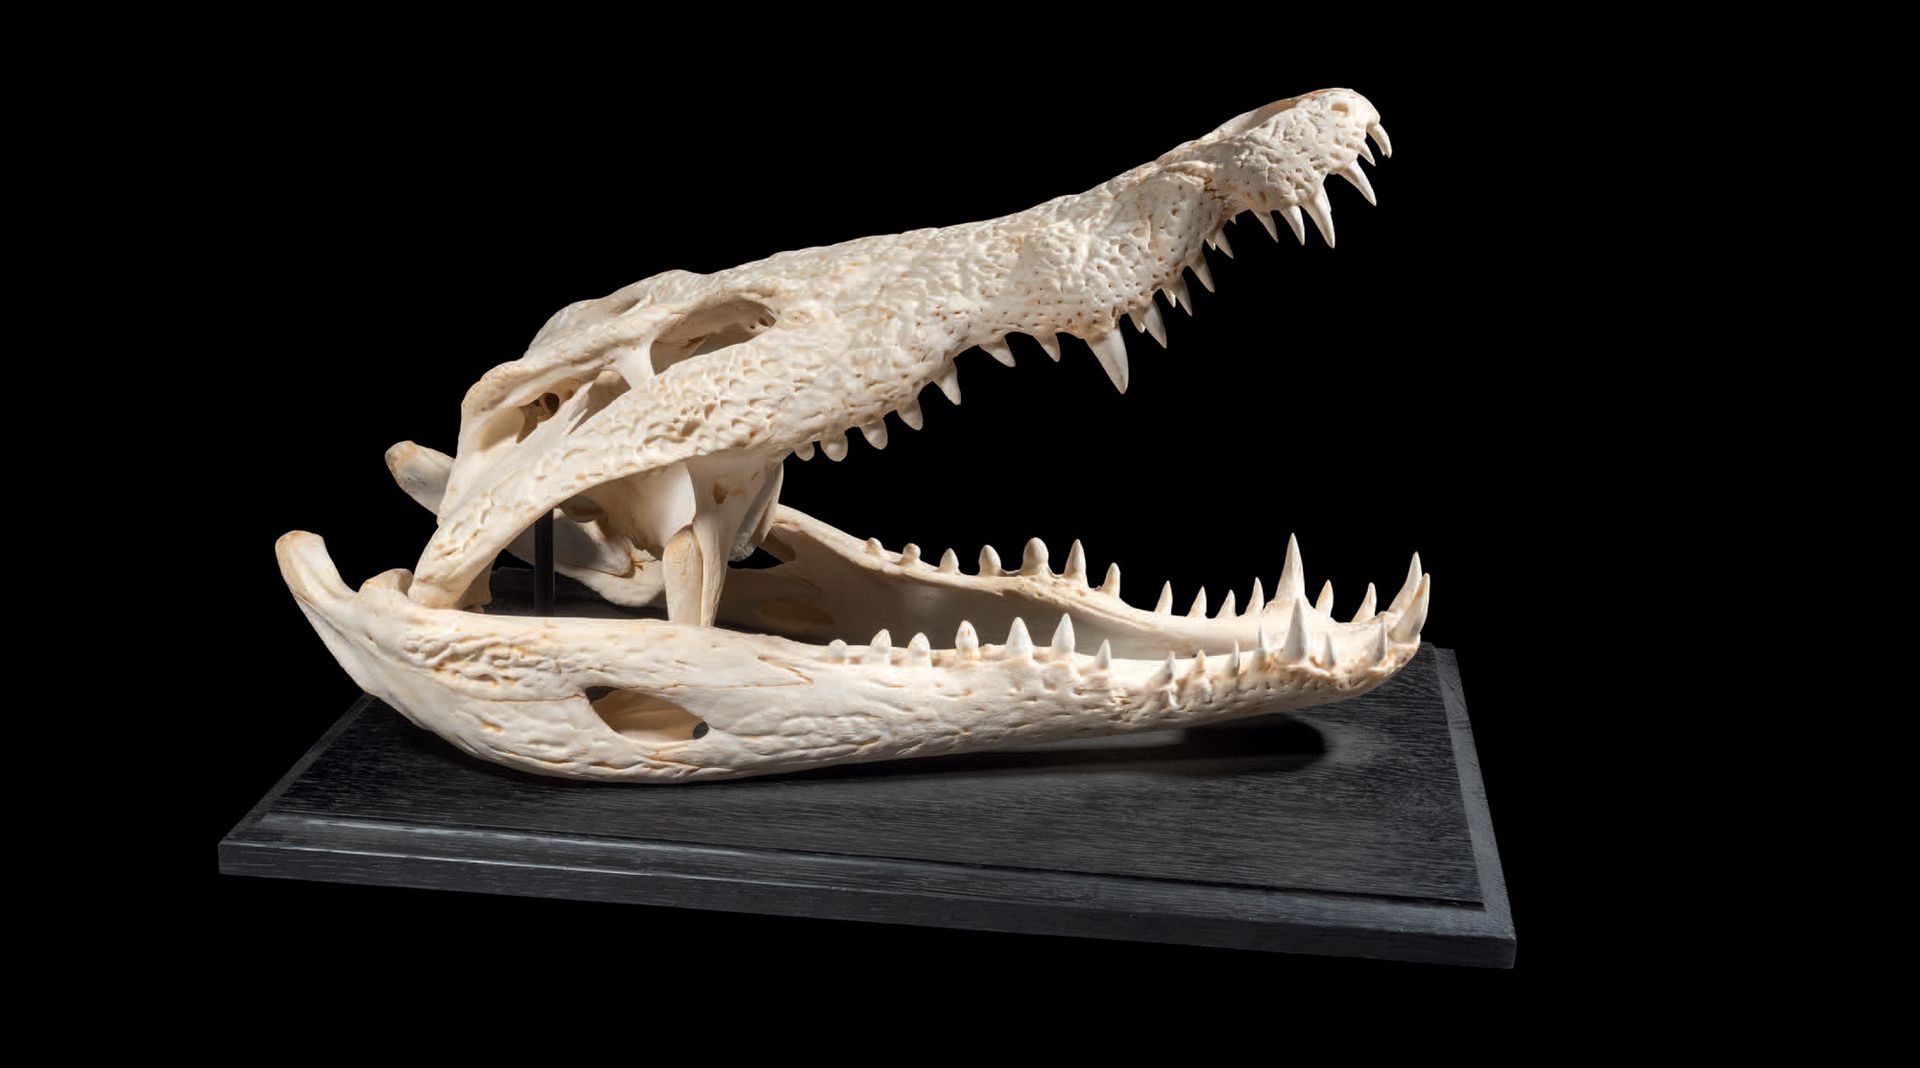 Null 木质底座上的鳄鱼头骨
Crocodylus niloticus
L. 50 cm
动物休息时张嘴的表现。